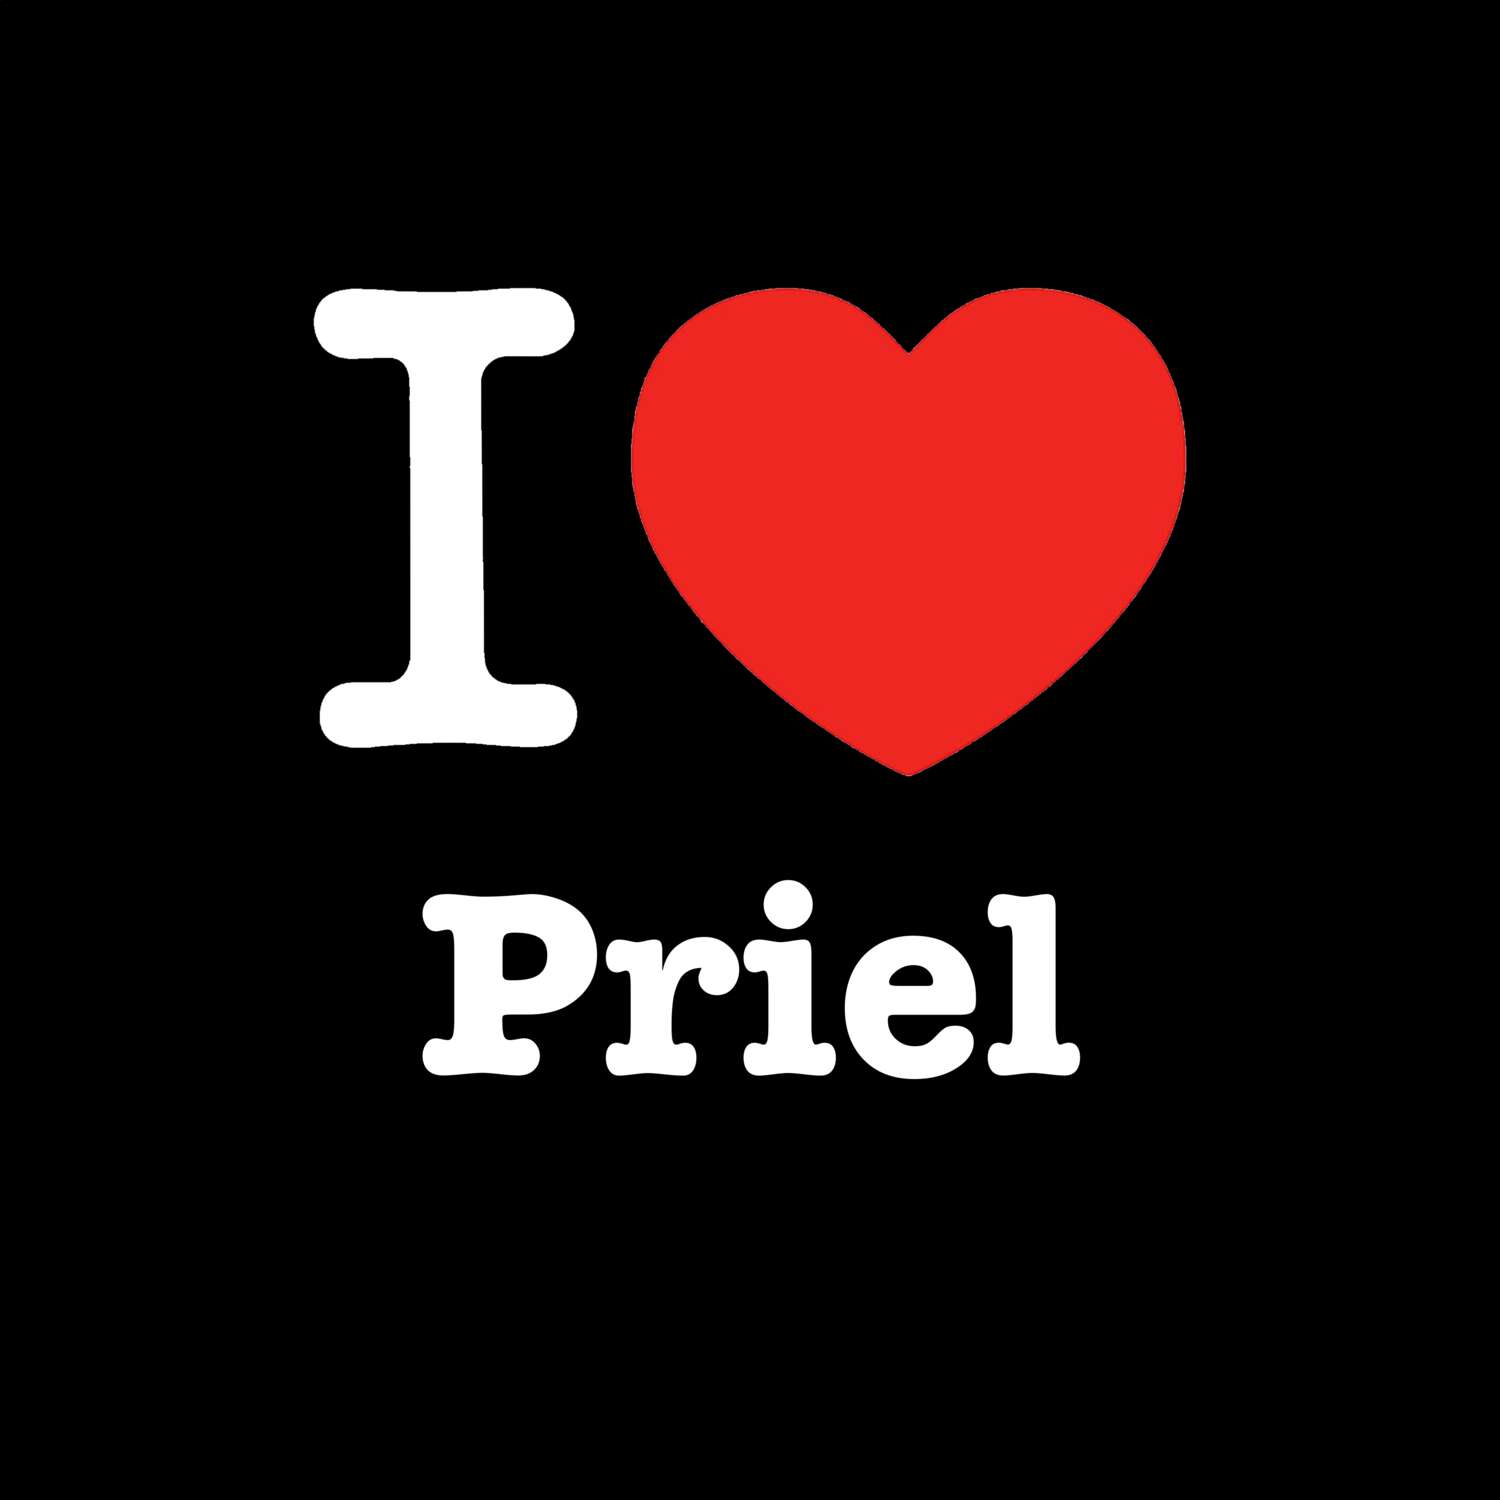 Priel T-Shirt »I love«